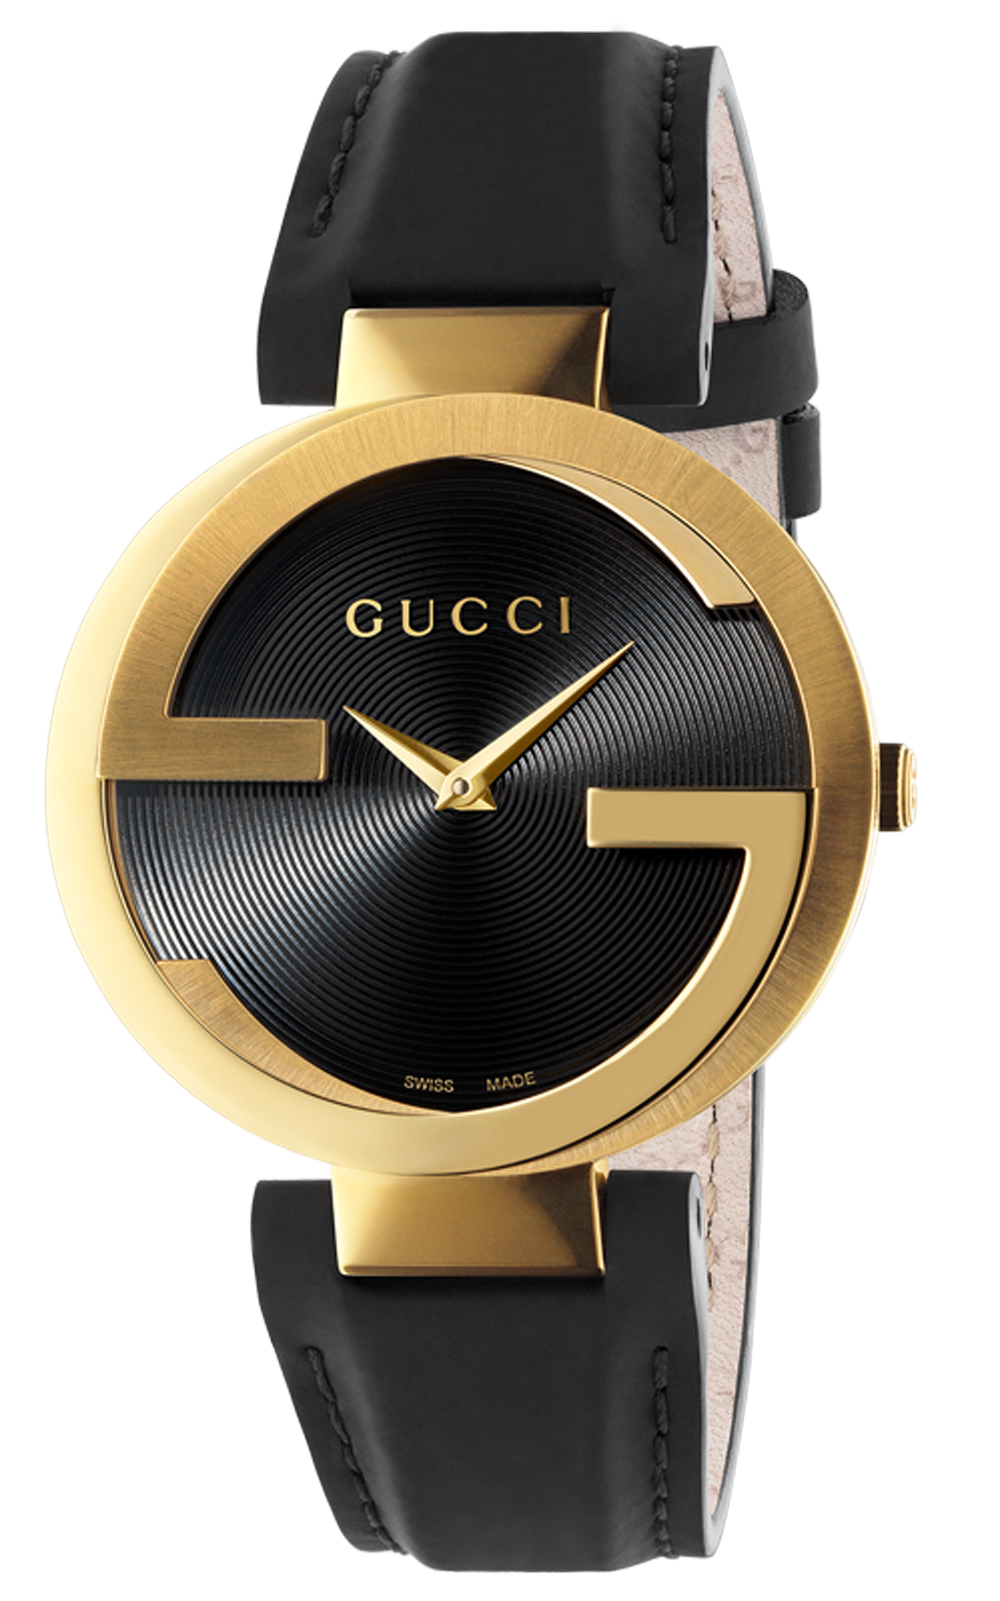 Đồng hồ nữ Gucci YA133326